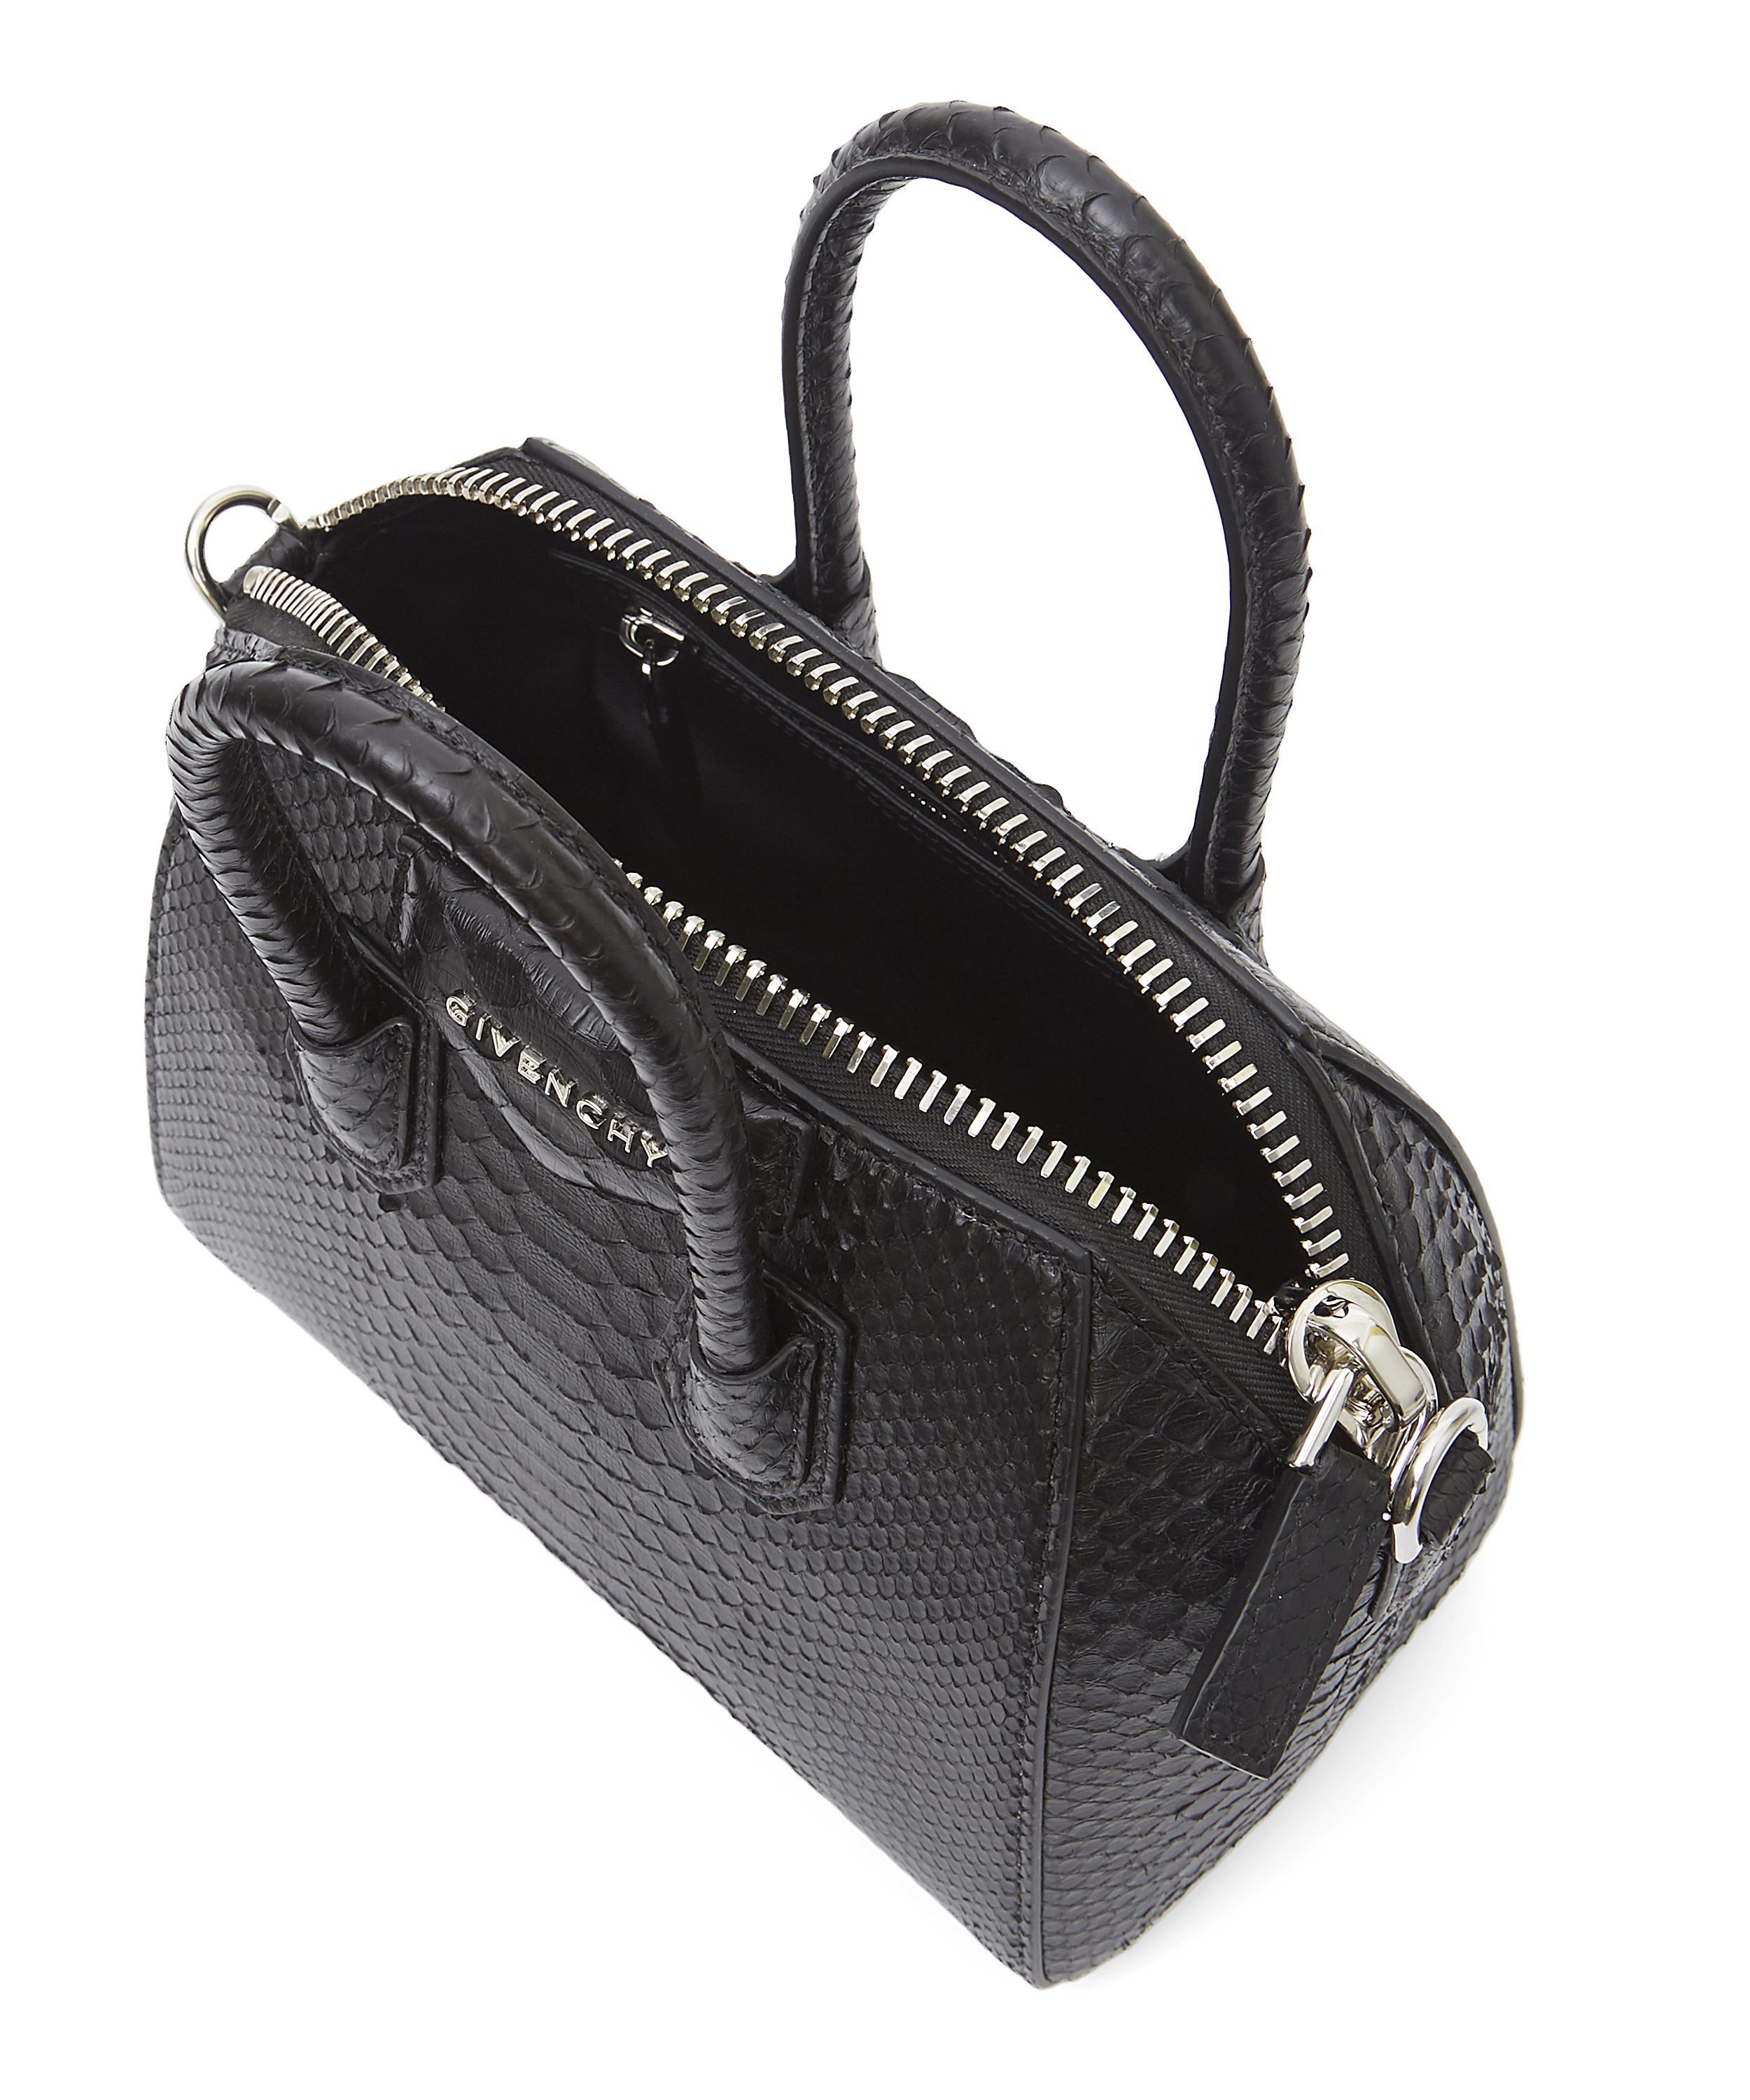 Lyst - Givenchy Mini Antigona Python Cross Body Bag in Black